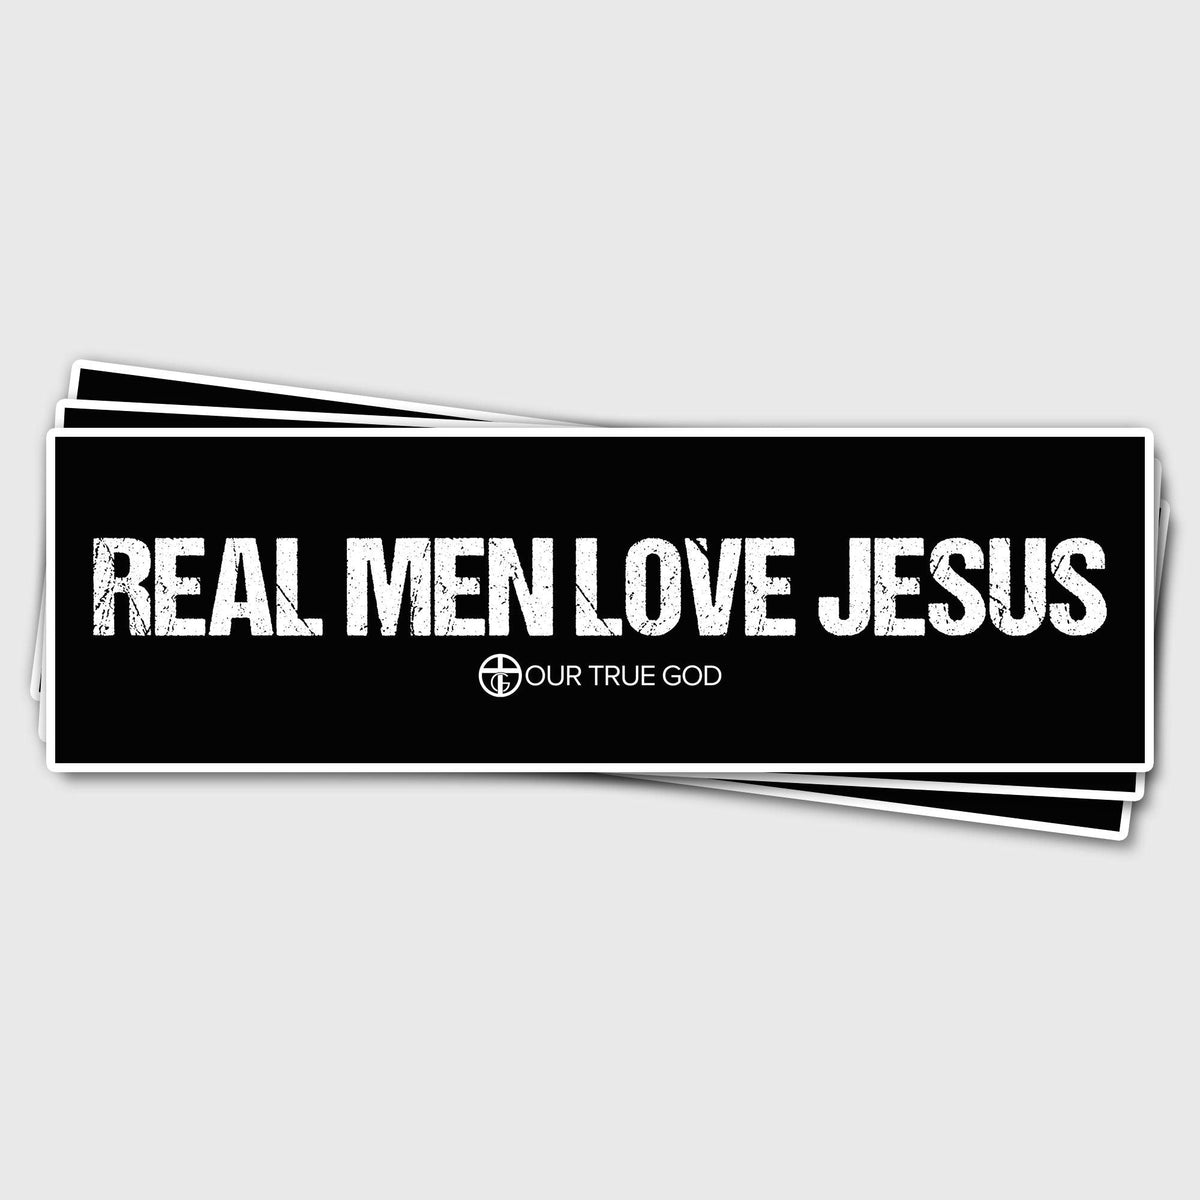 Real Men Love Jesus Bumper Stickers - Our True God